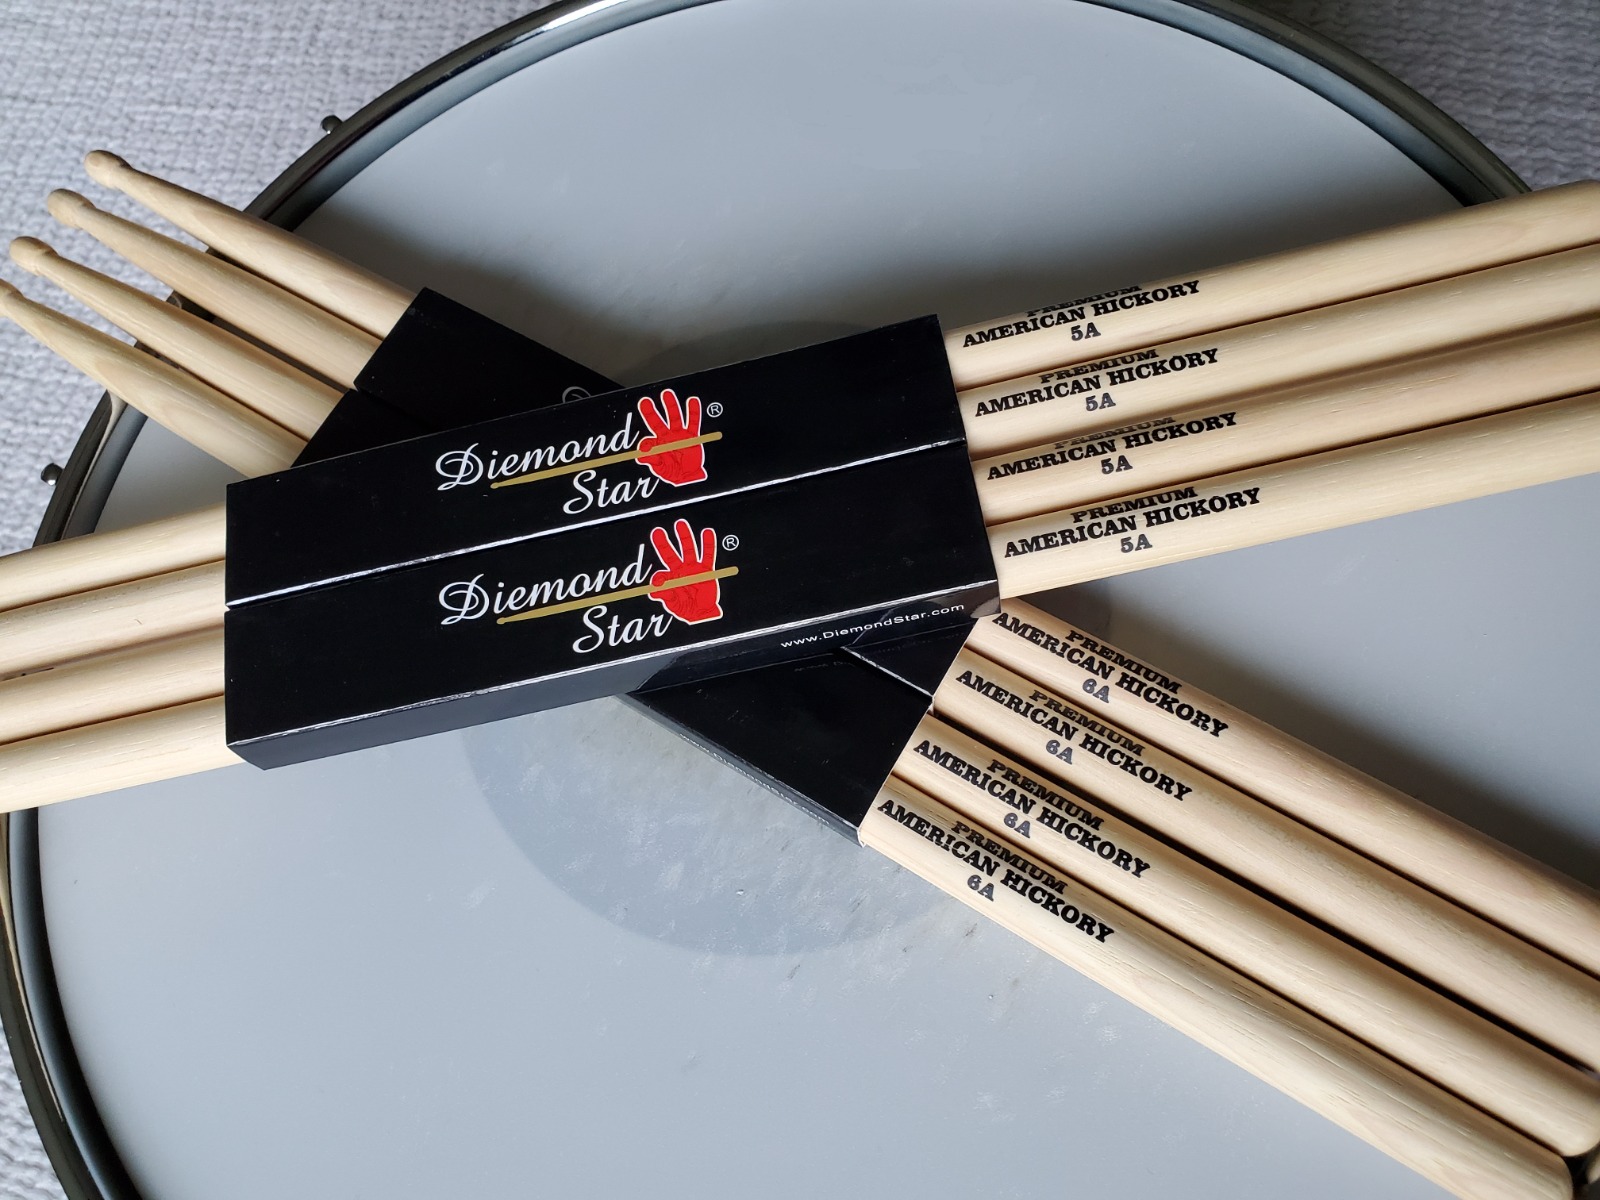 Diemond Star: The Drumsticks Preferred by Drummers Across the Globe